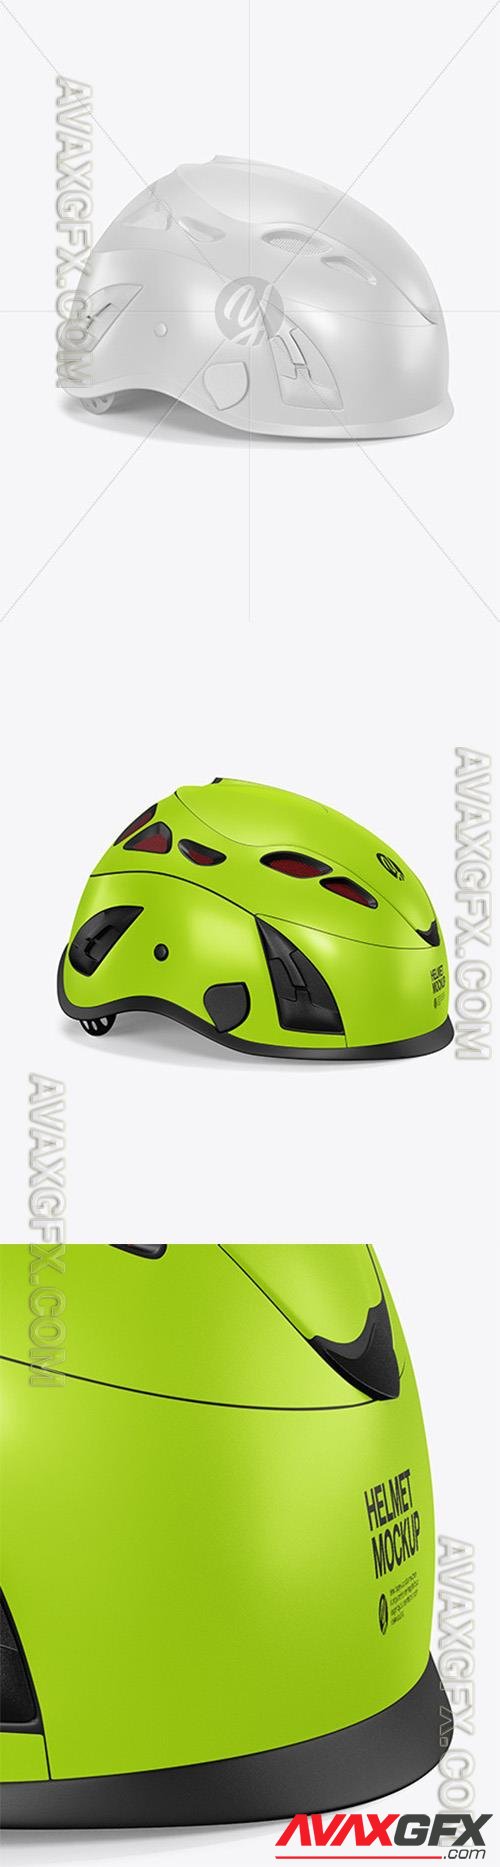 Cycling Helmet Mockup 75312